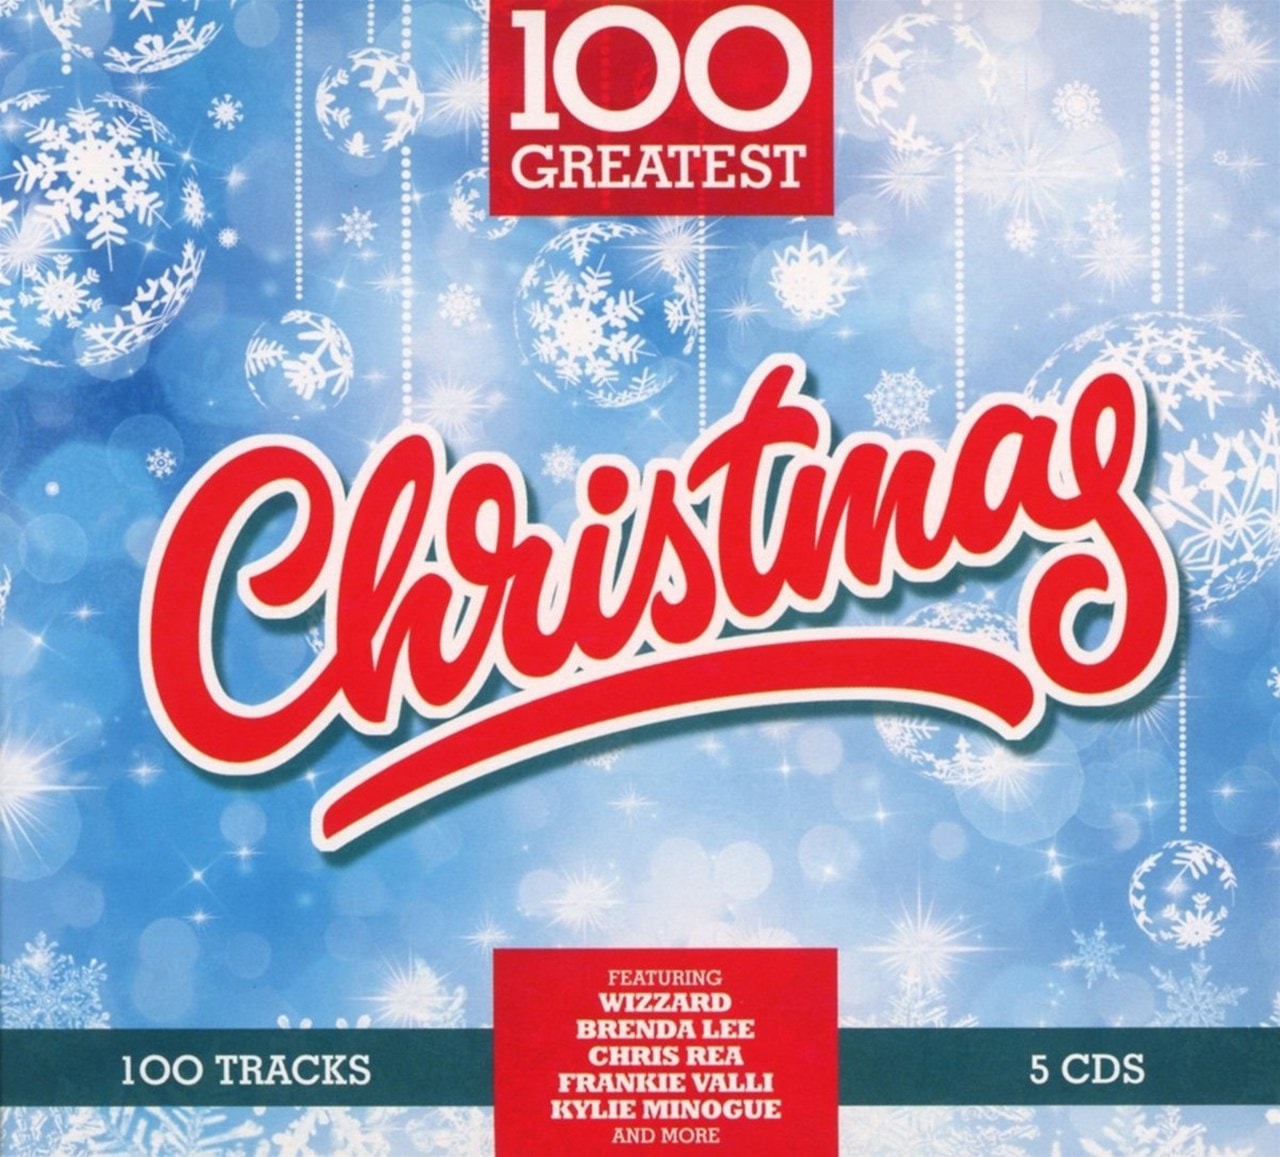 100 Greatest Christmas CD Album Free shipping over £20 HMV Store